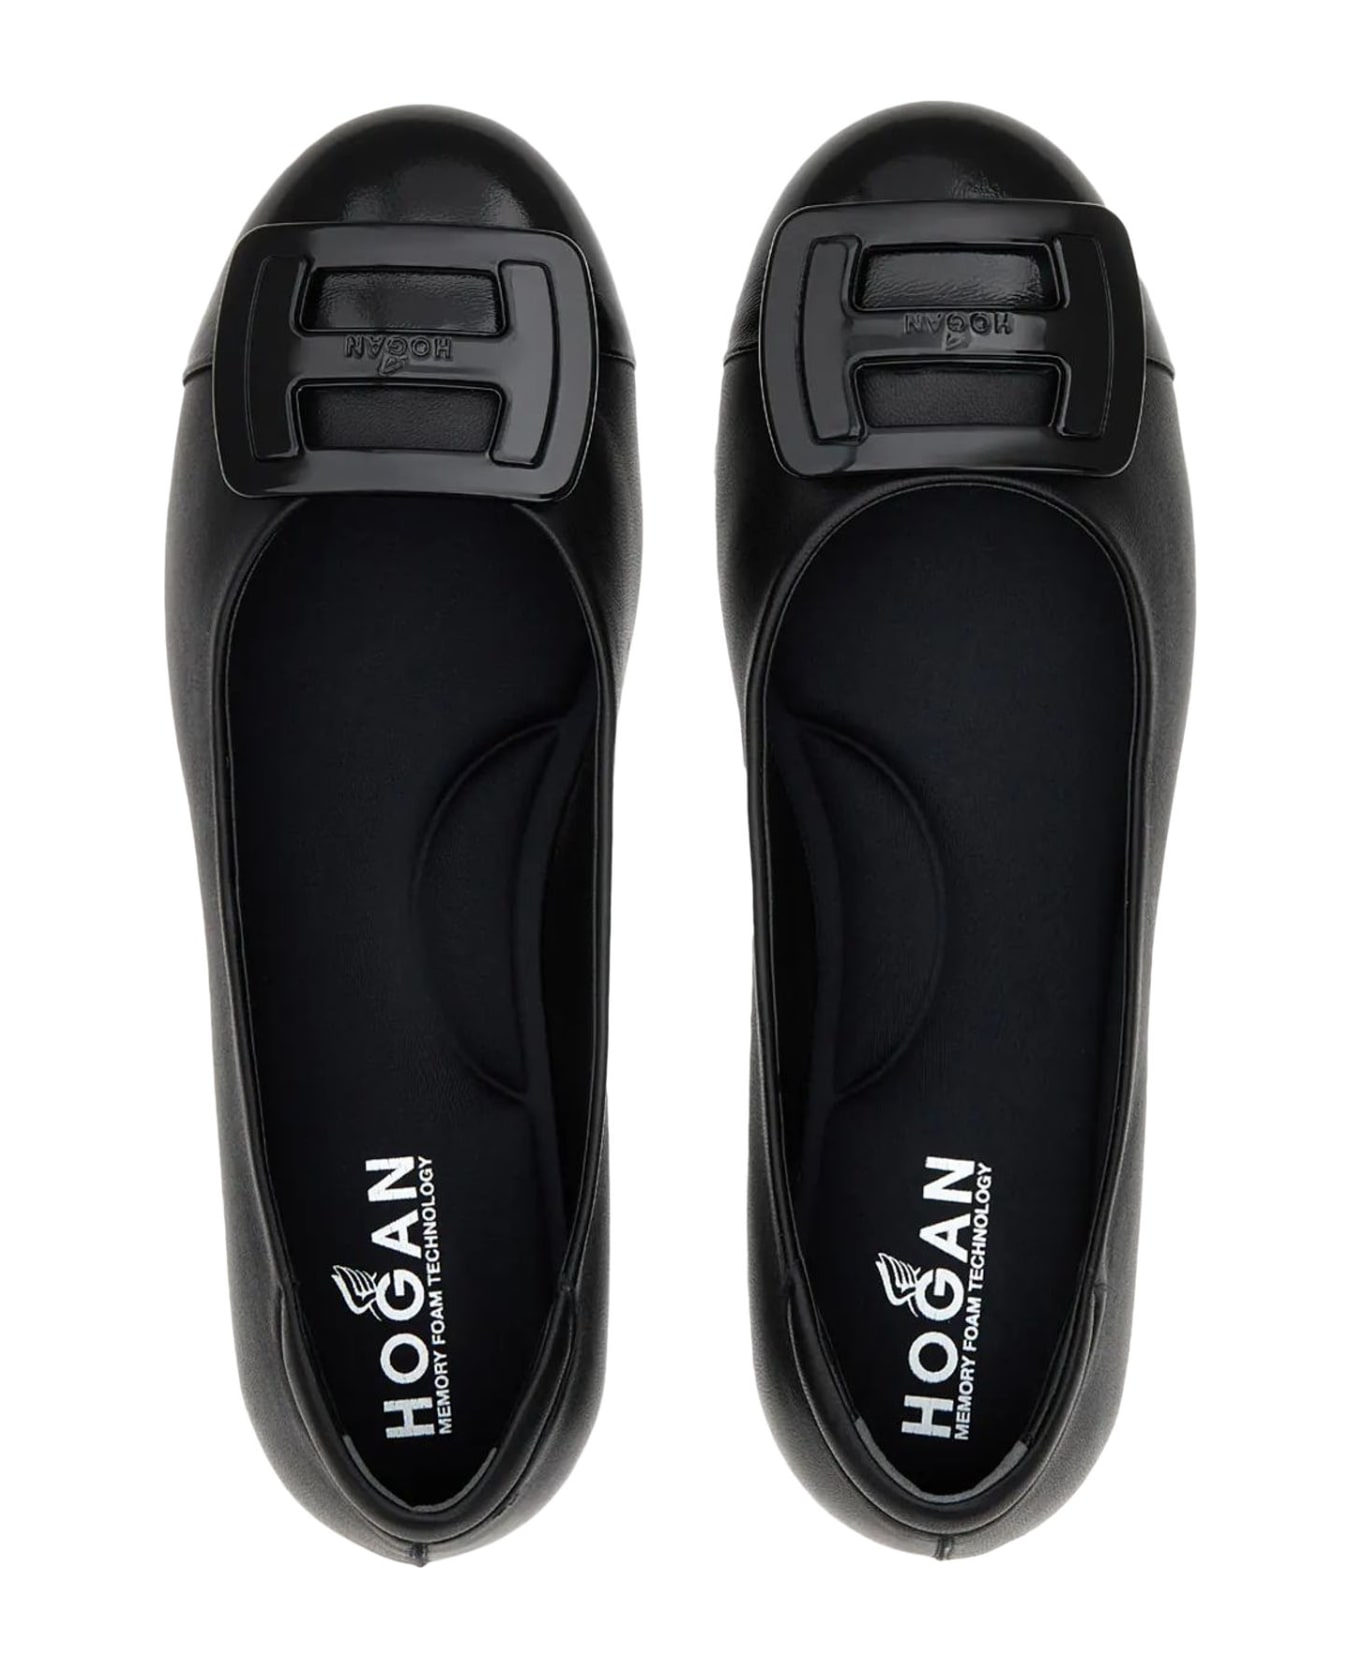 Hogan Flat Shoes Black - Black